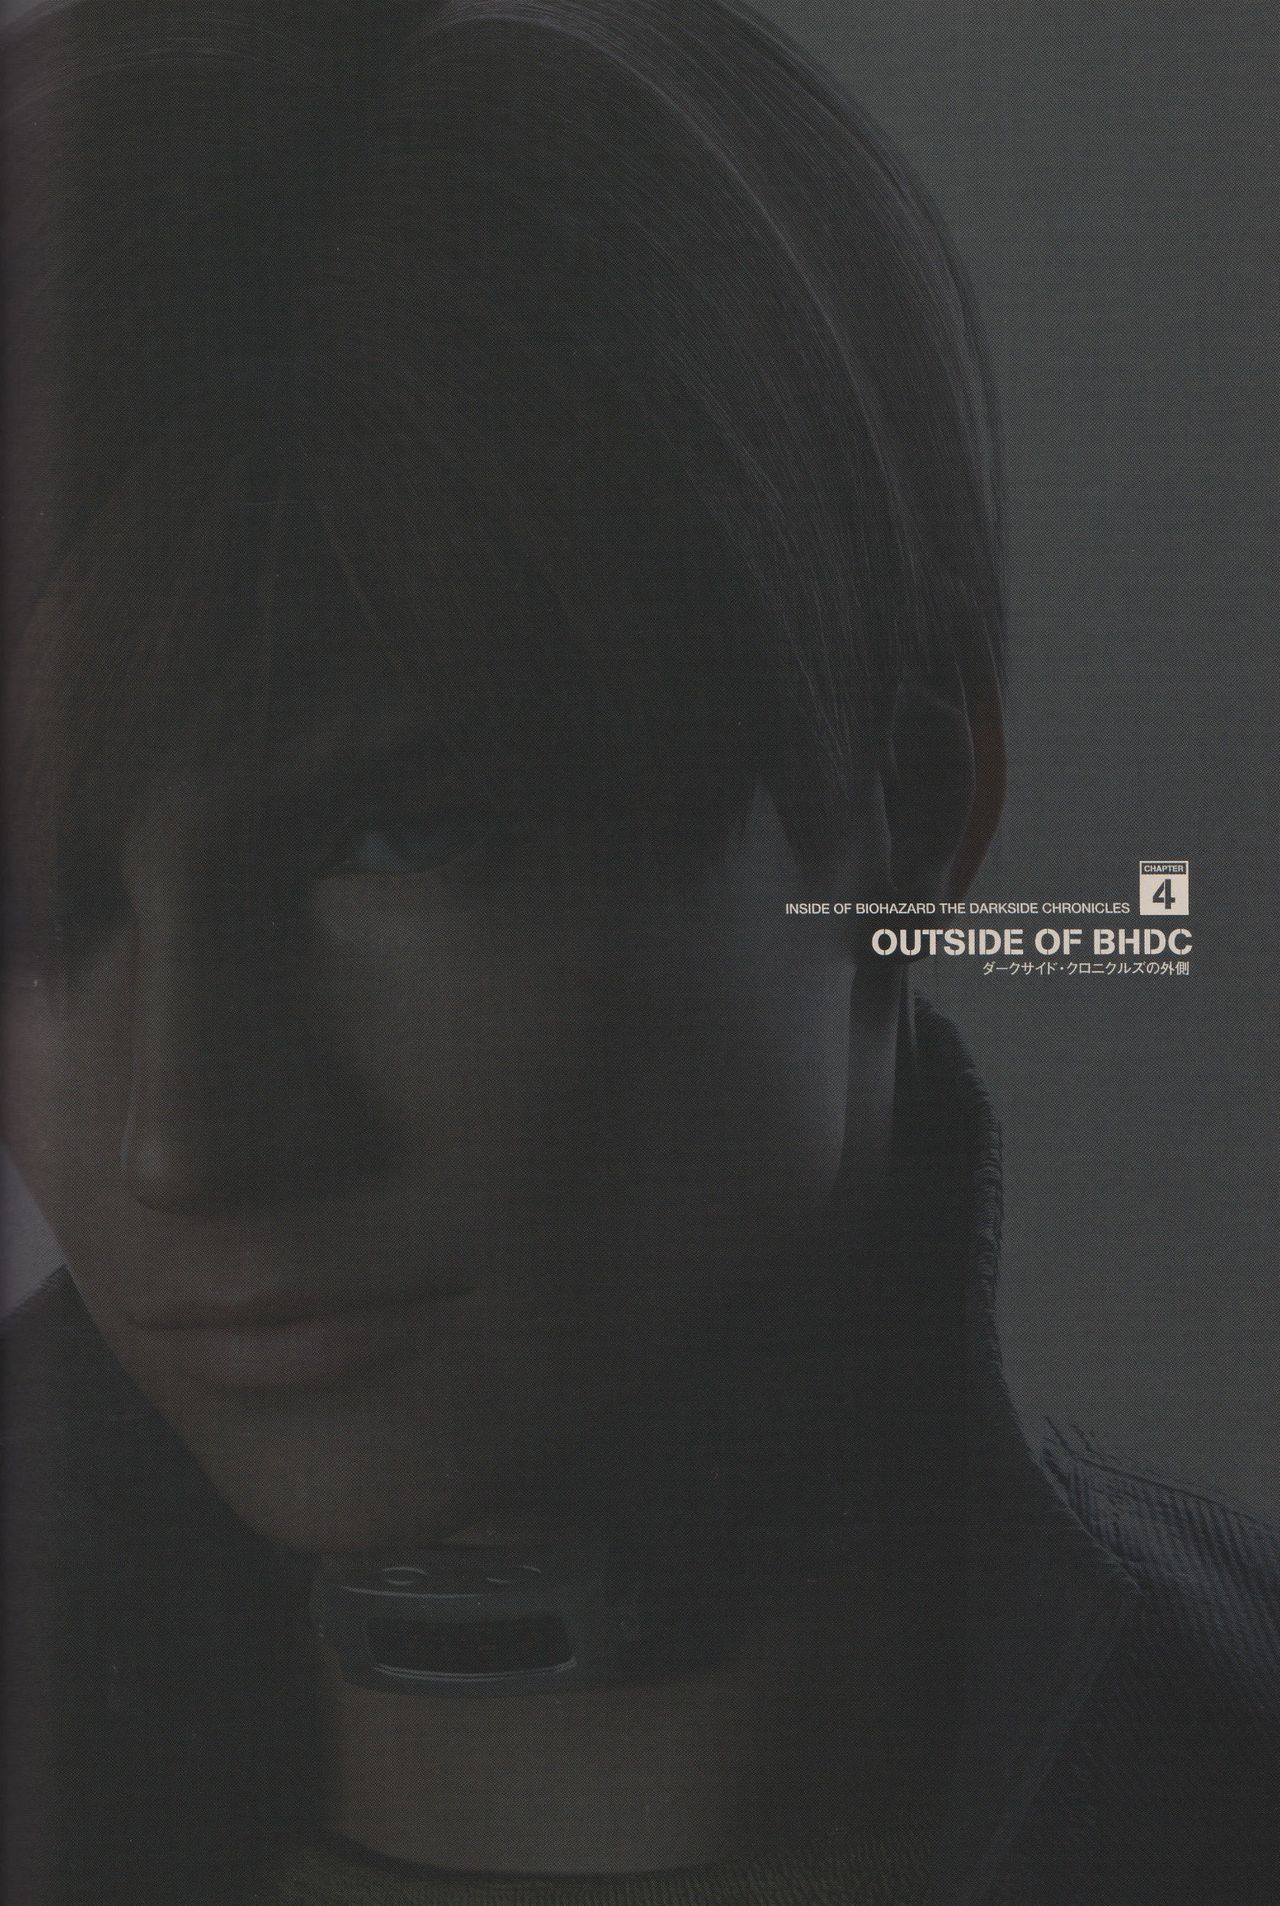 Resident Evil: The Darkside Chronicles Artbook 173